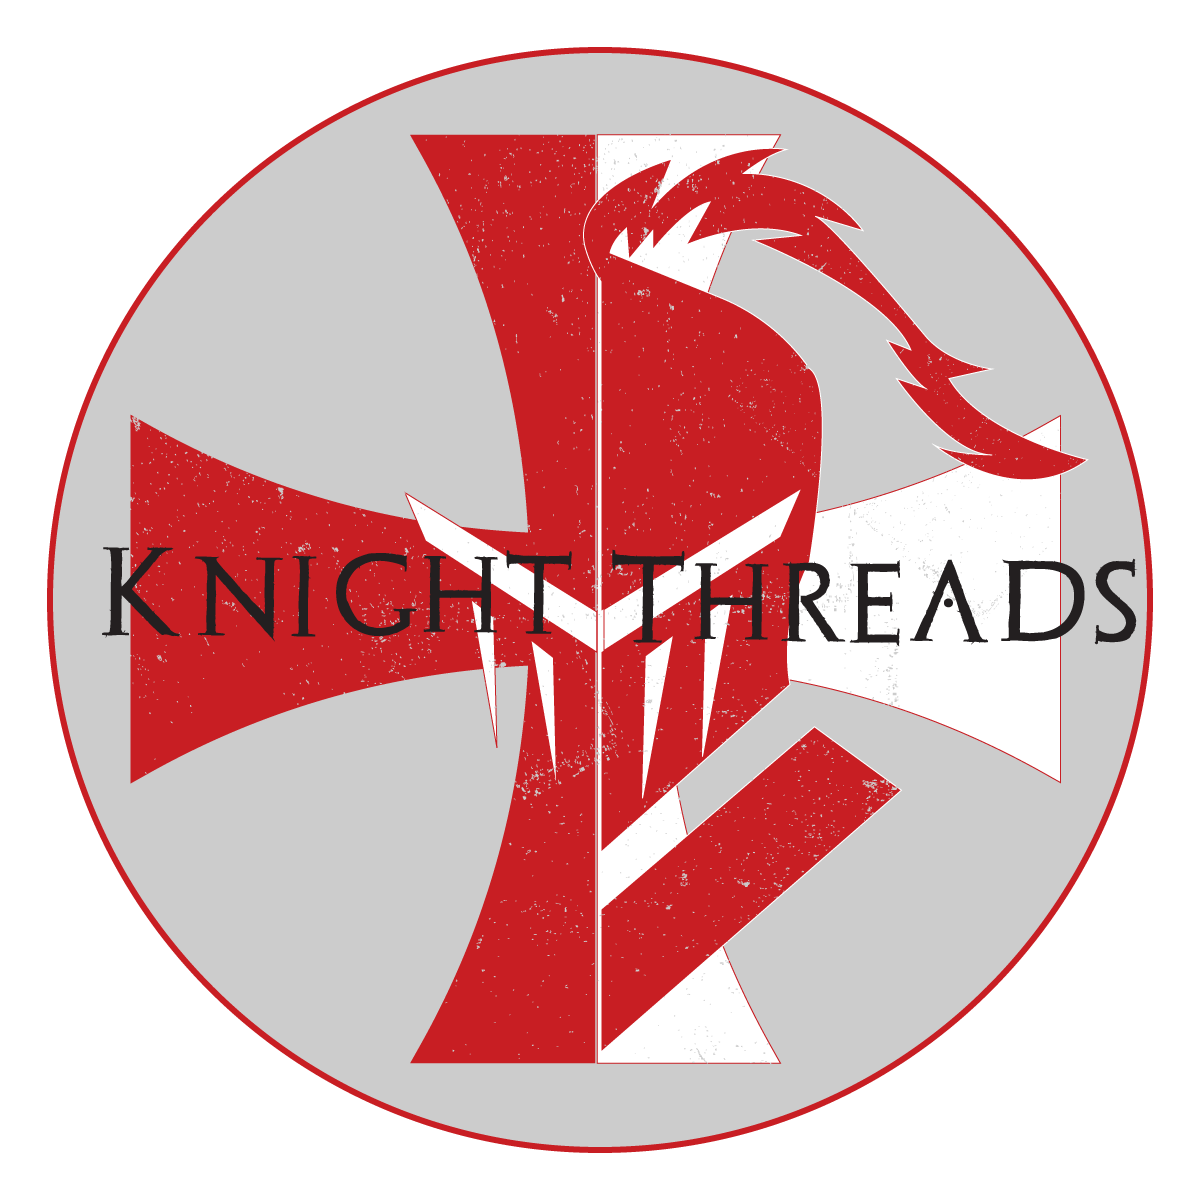 Knight Threads